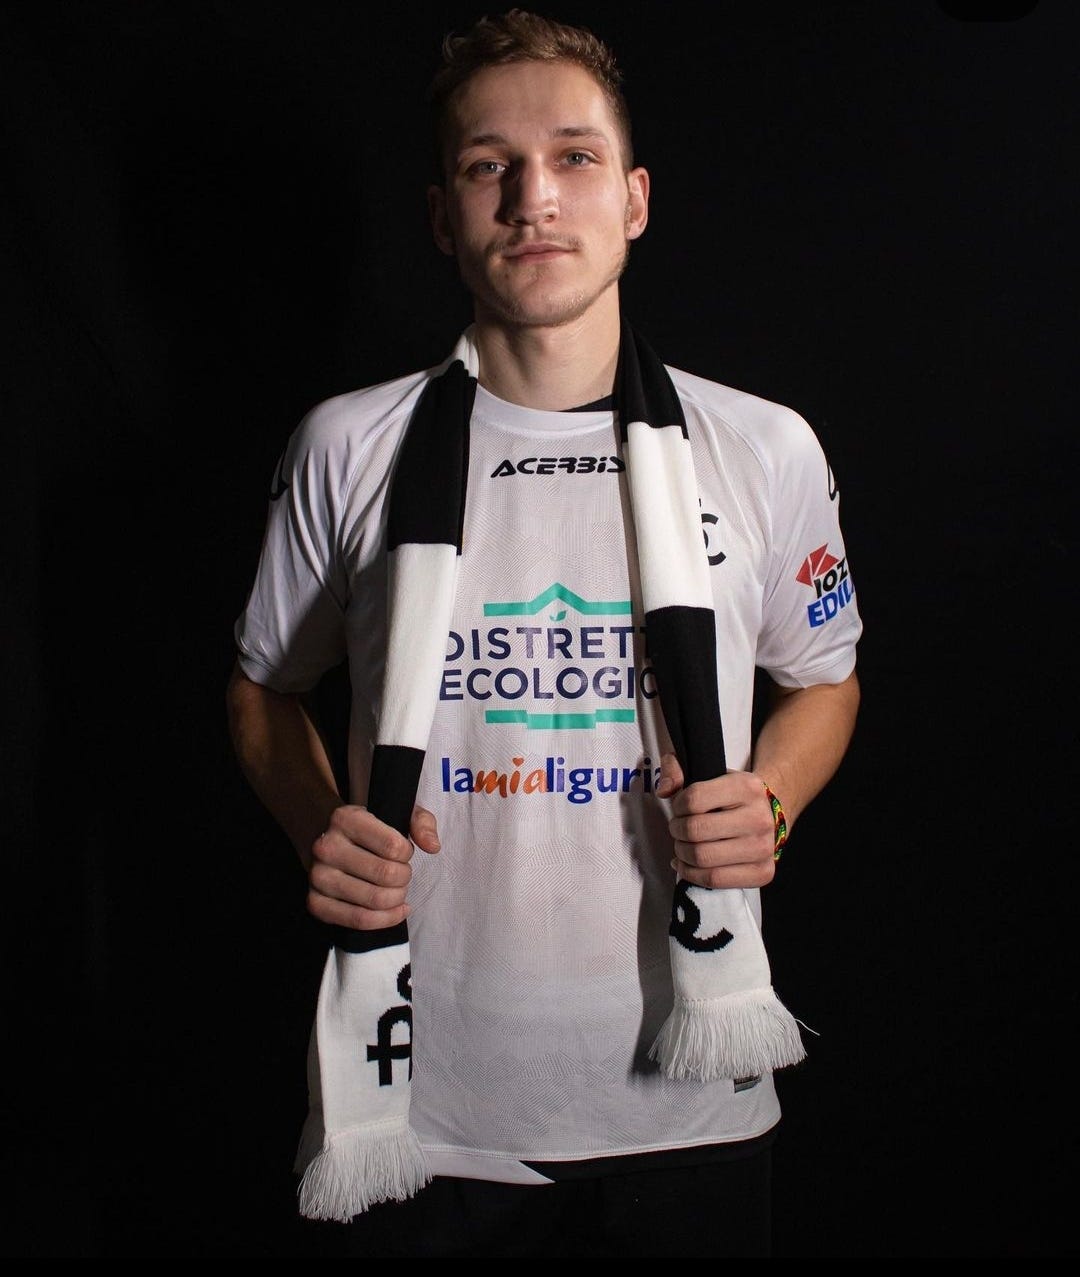 Igors Stepanovs - Player profile